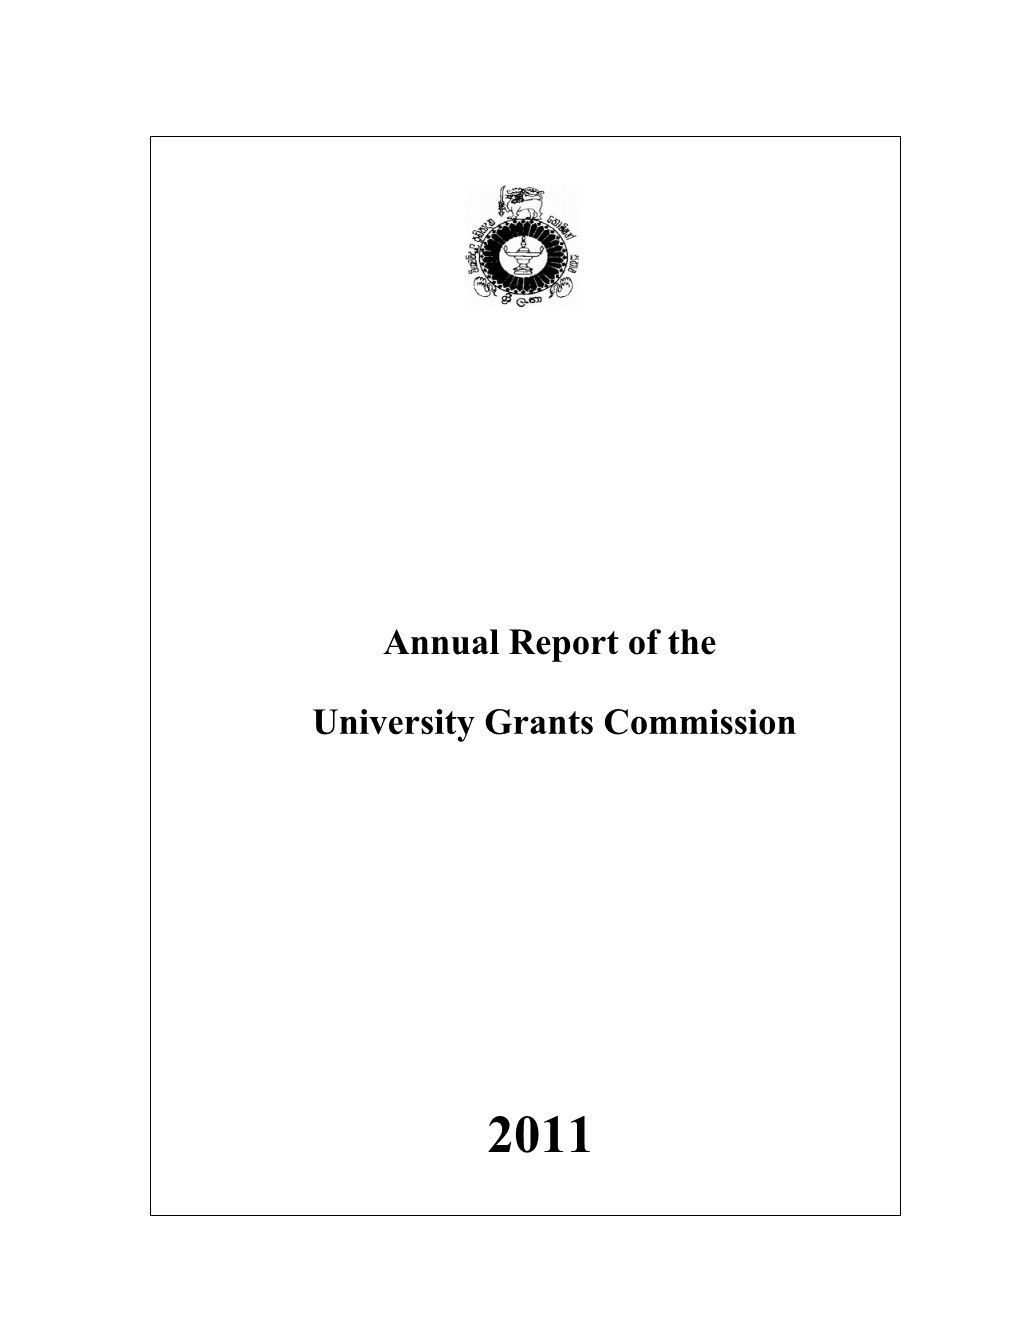 UGC Annual Report 2011 (English).Pdf